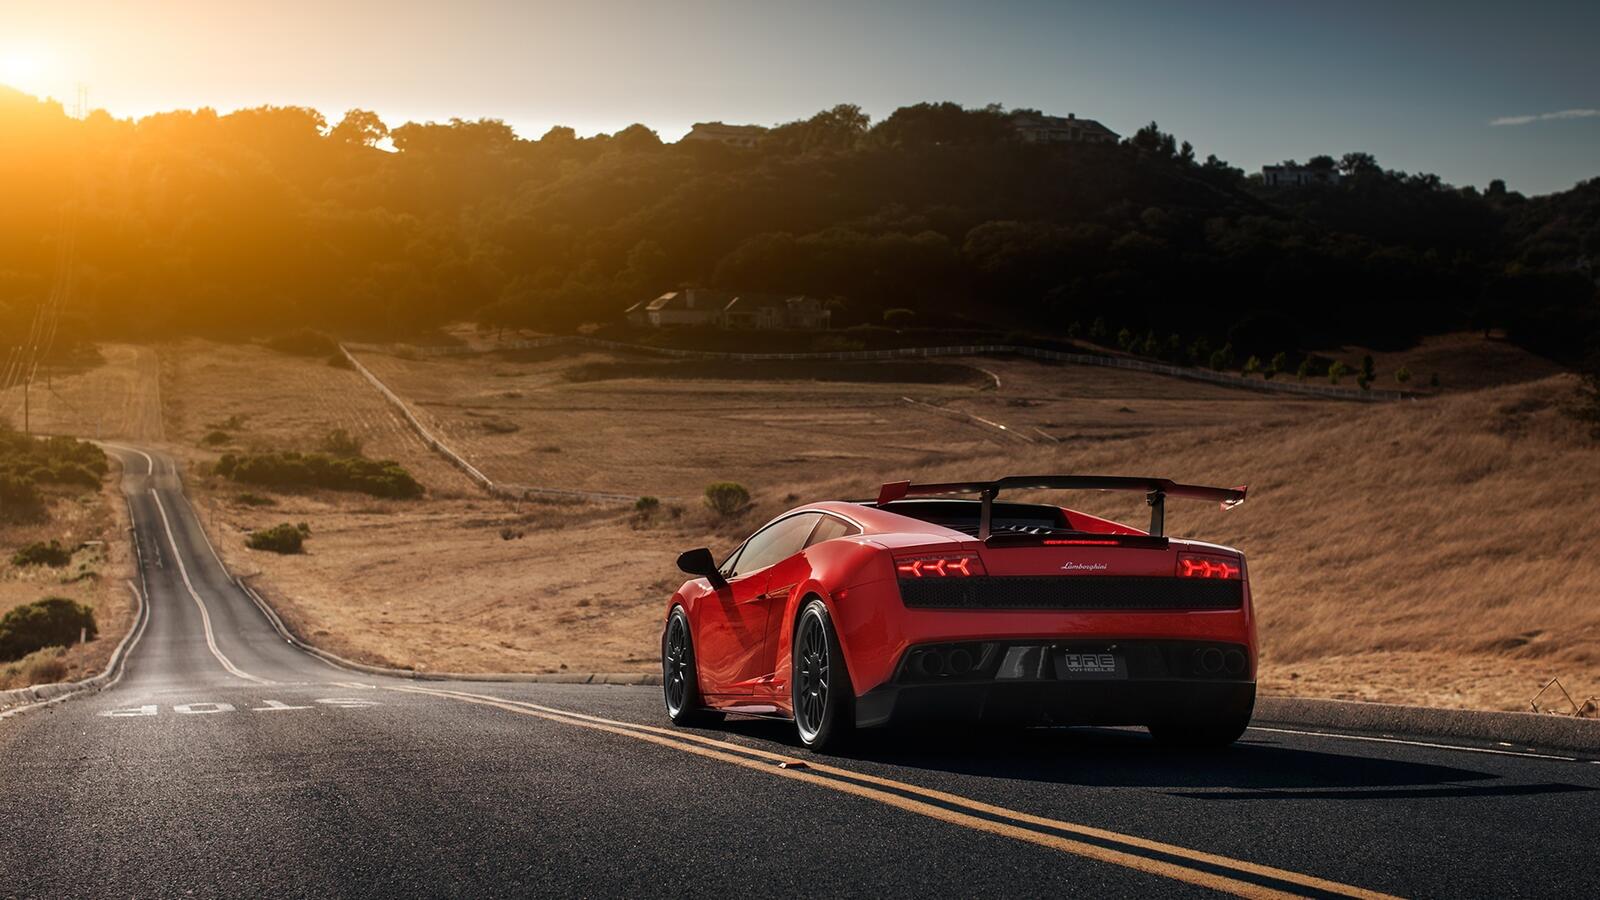 Free photo A red Lamborghini Gallardo on a country track.